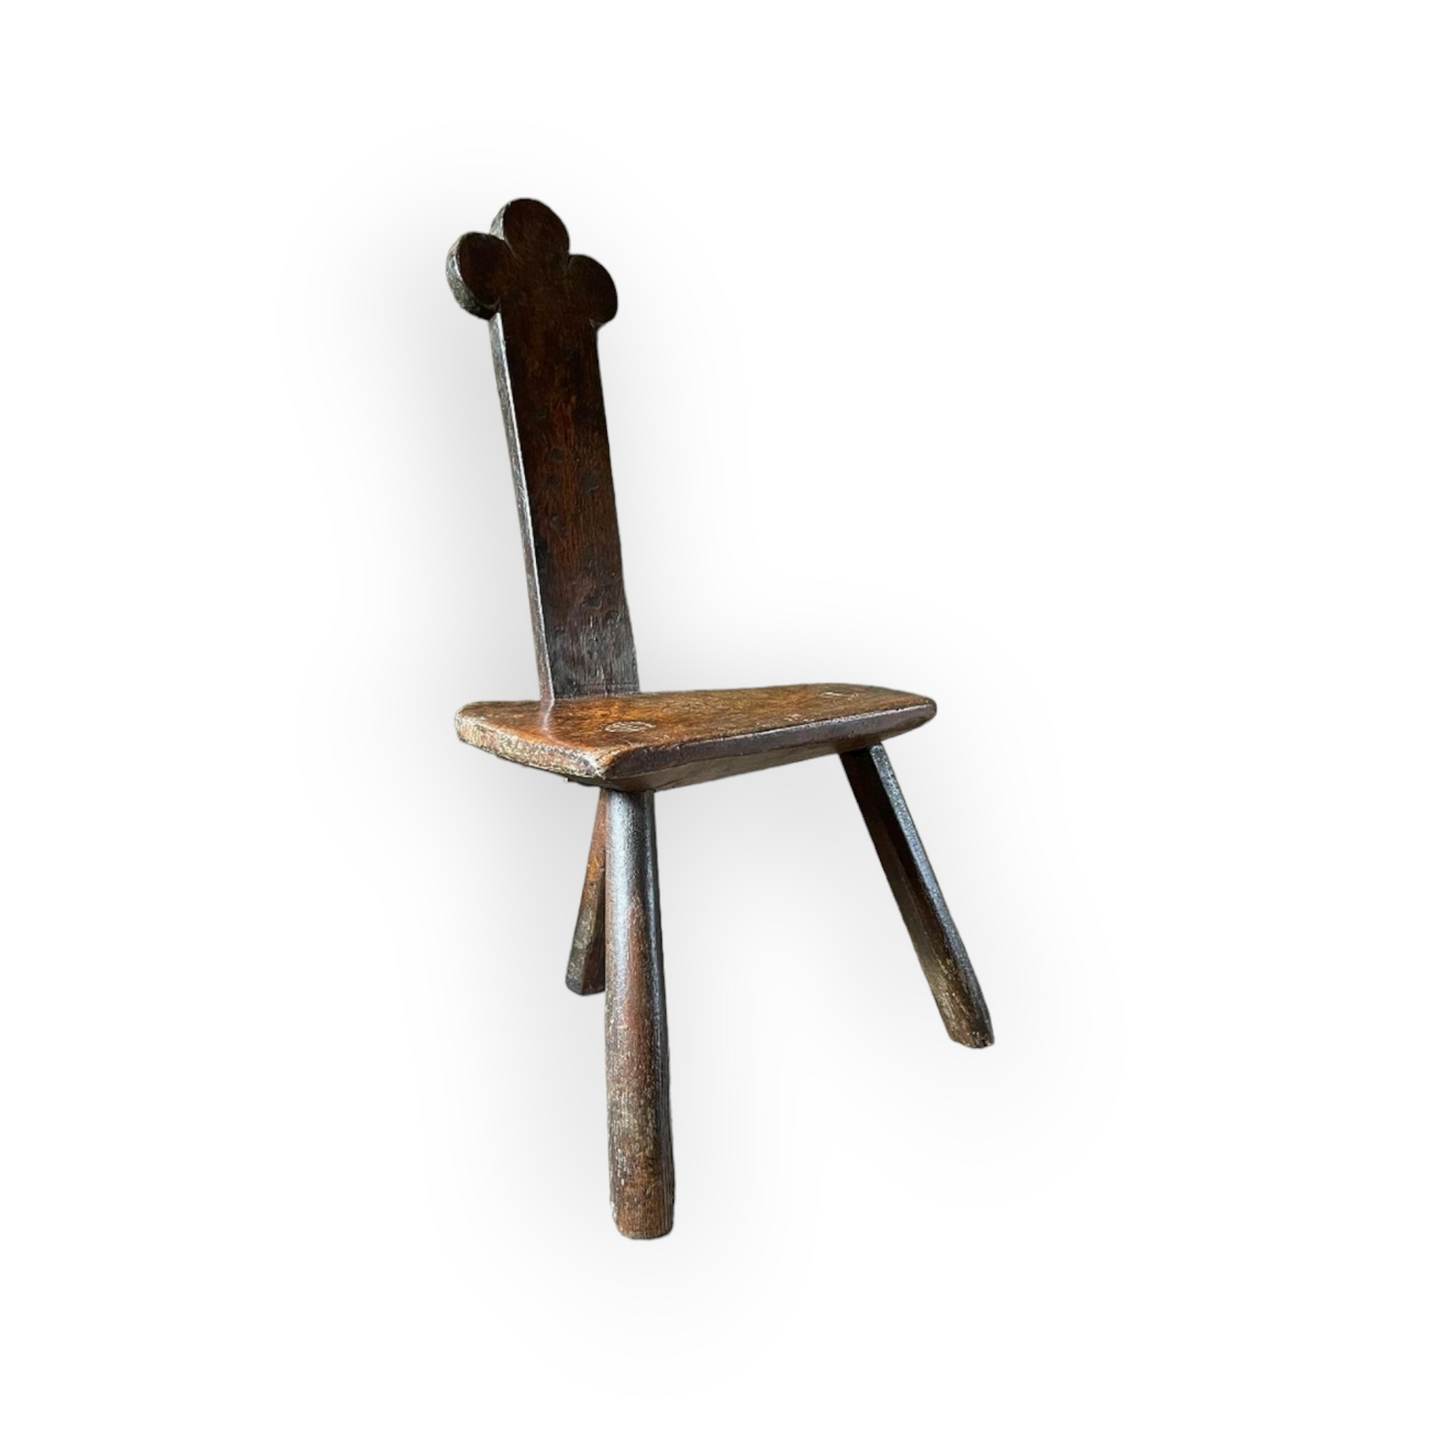 Rare Primitive 18th Century Welsh Antique Three-Legged Spinning Chair